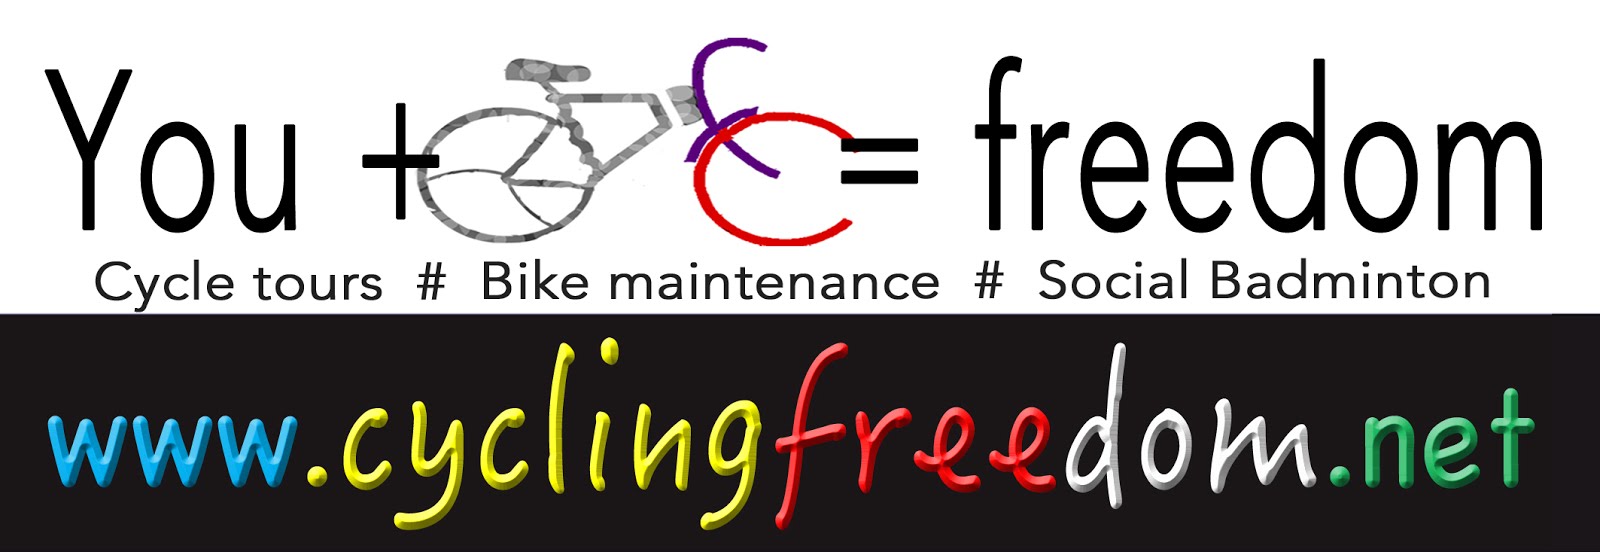 cycling freedom